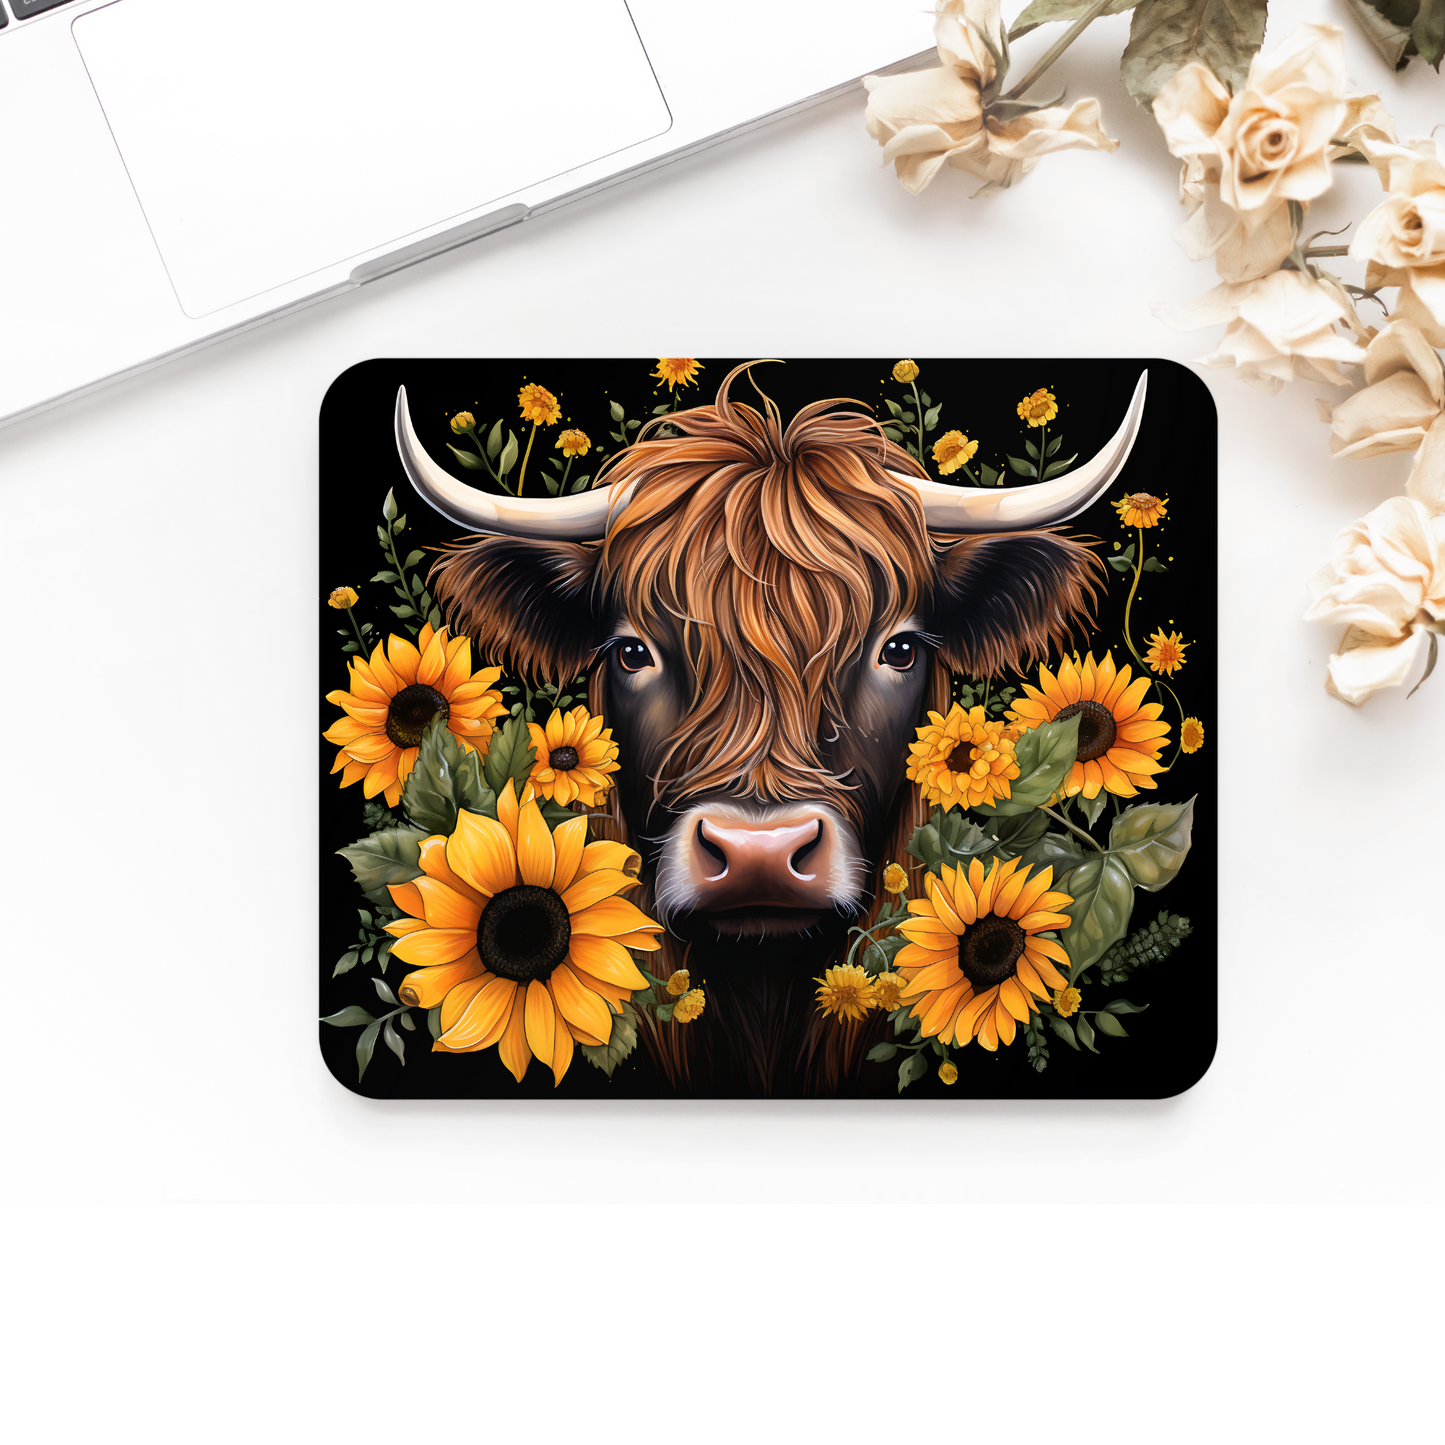 Premium Printed Anti-Slip Mouse Mat - Ultra Durable Sunflower Highland Cow Design